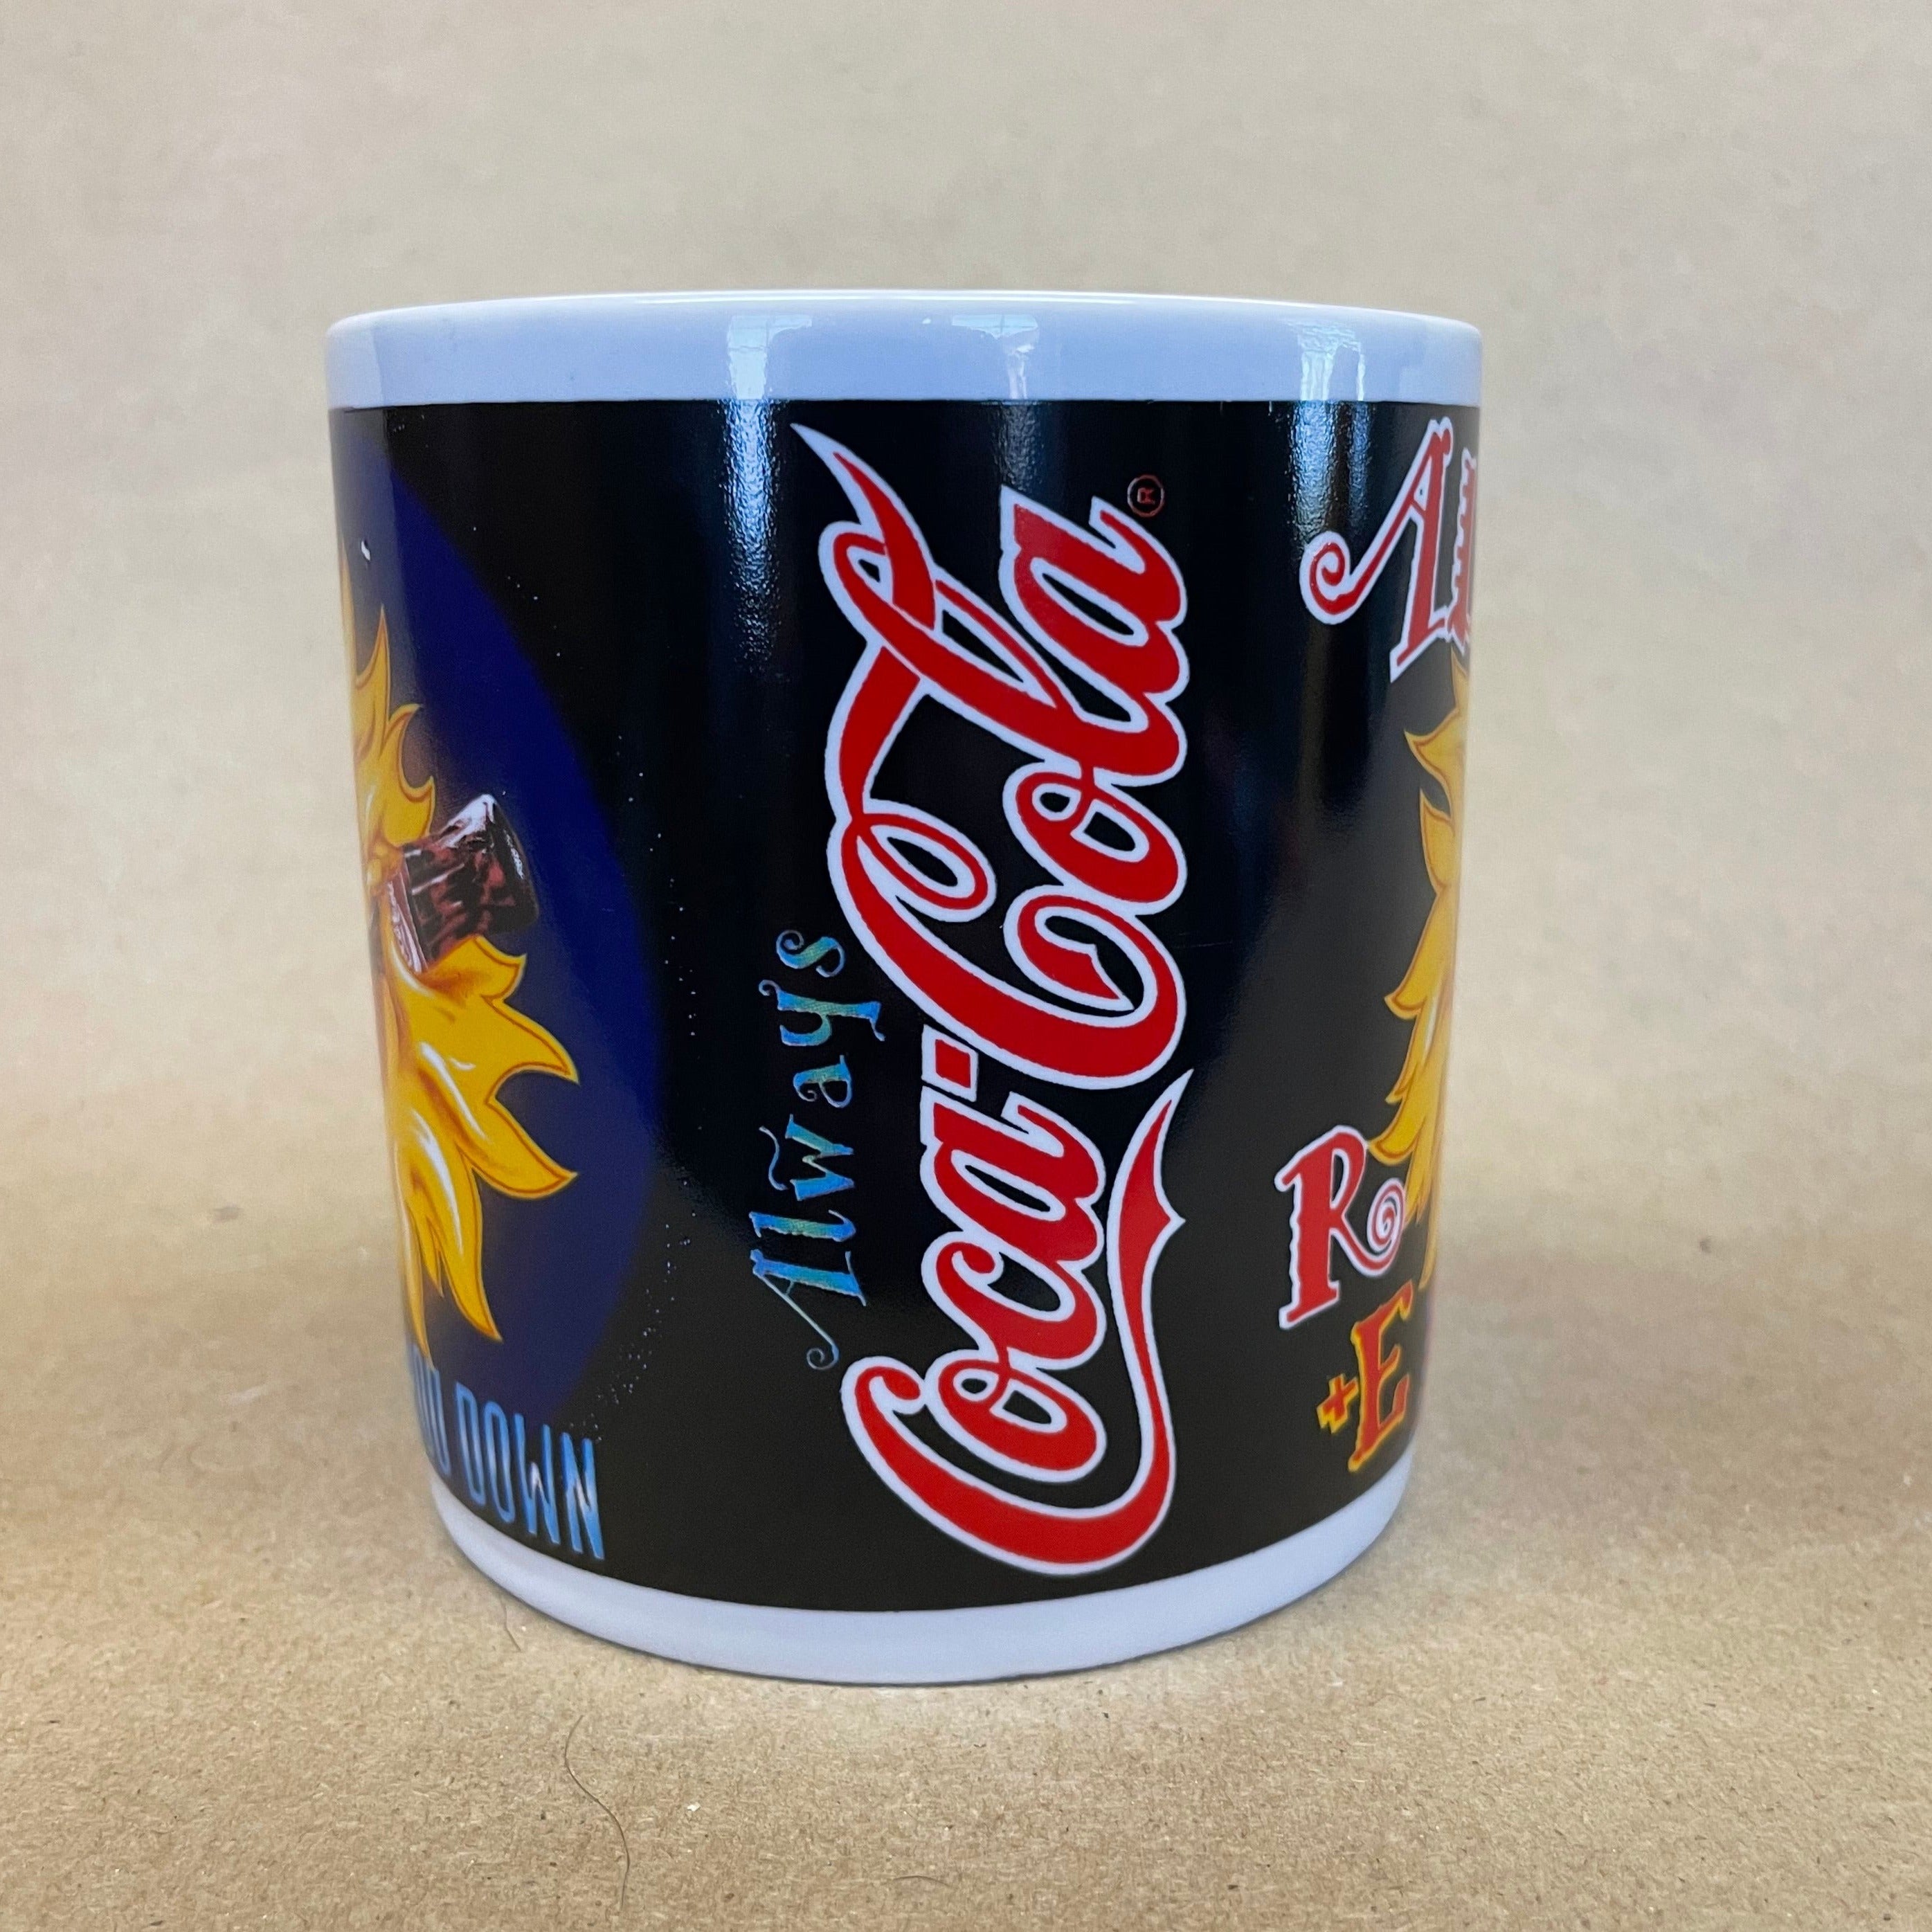 Coca-Cola Always Red Hot Mug-1995